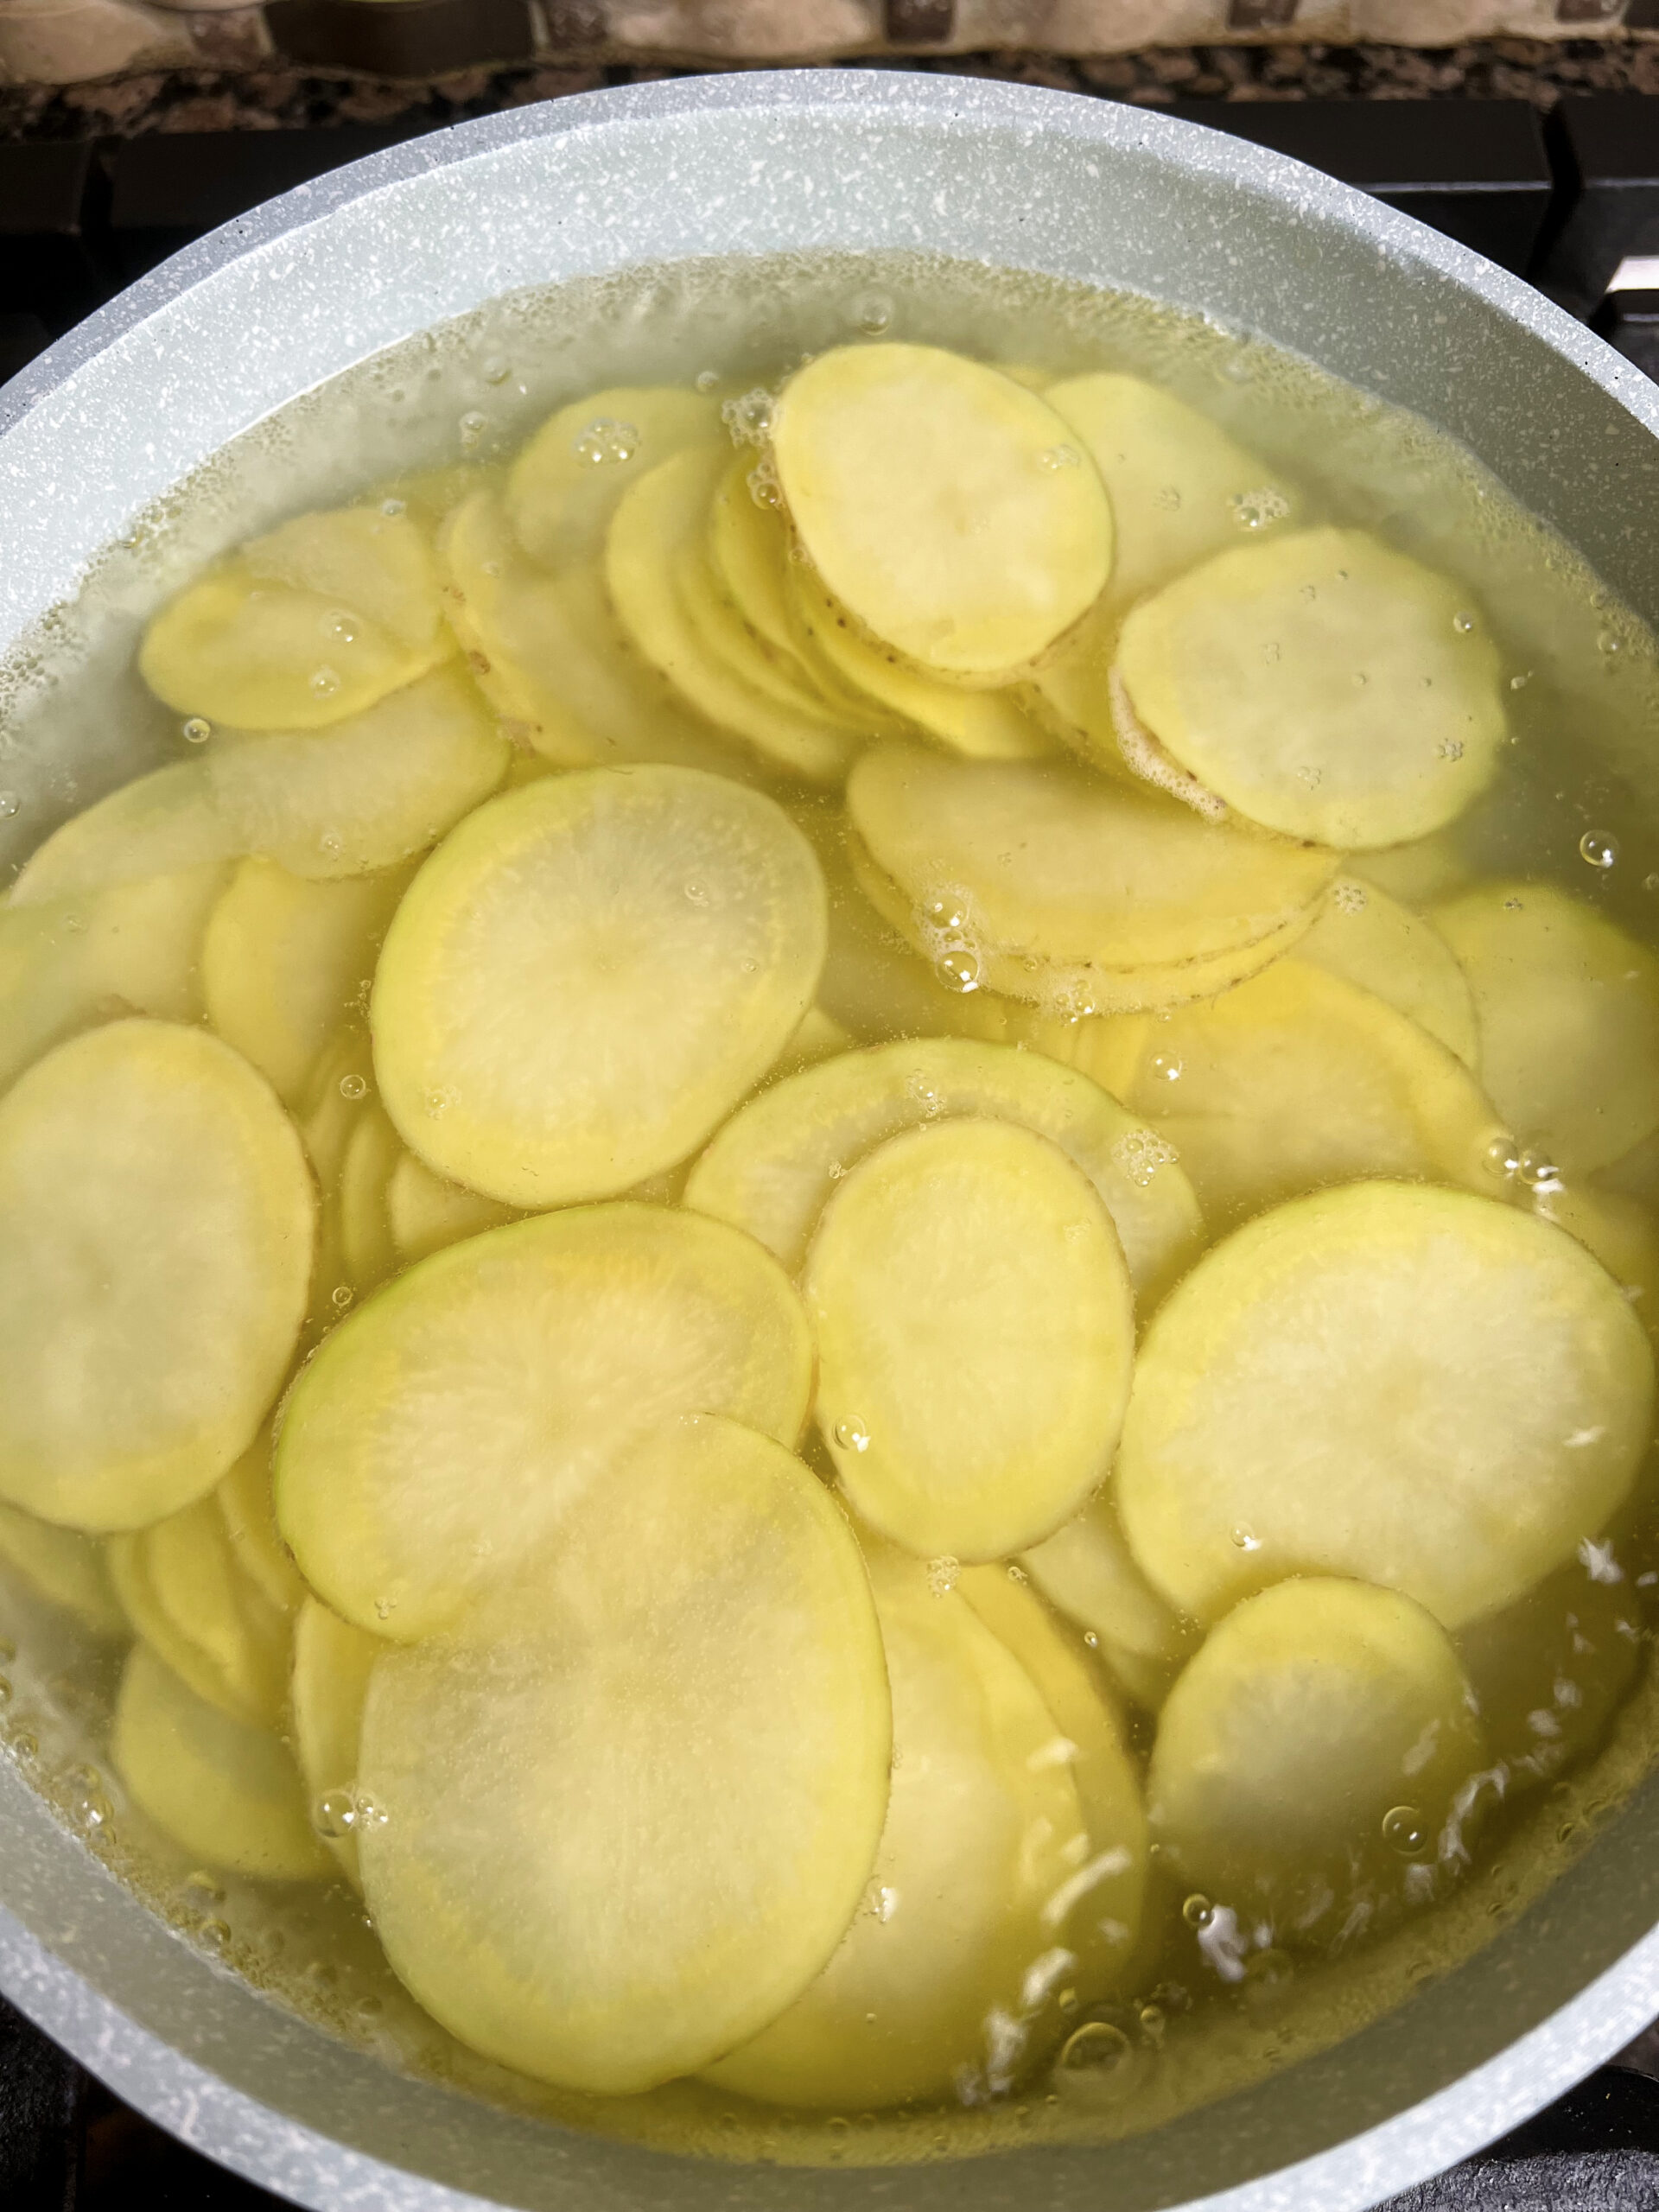 Homemade Crispy Thin Potato Chips